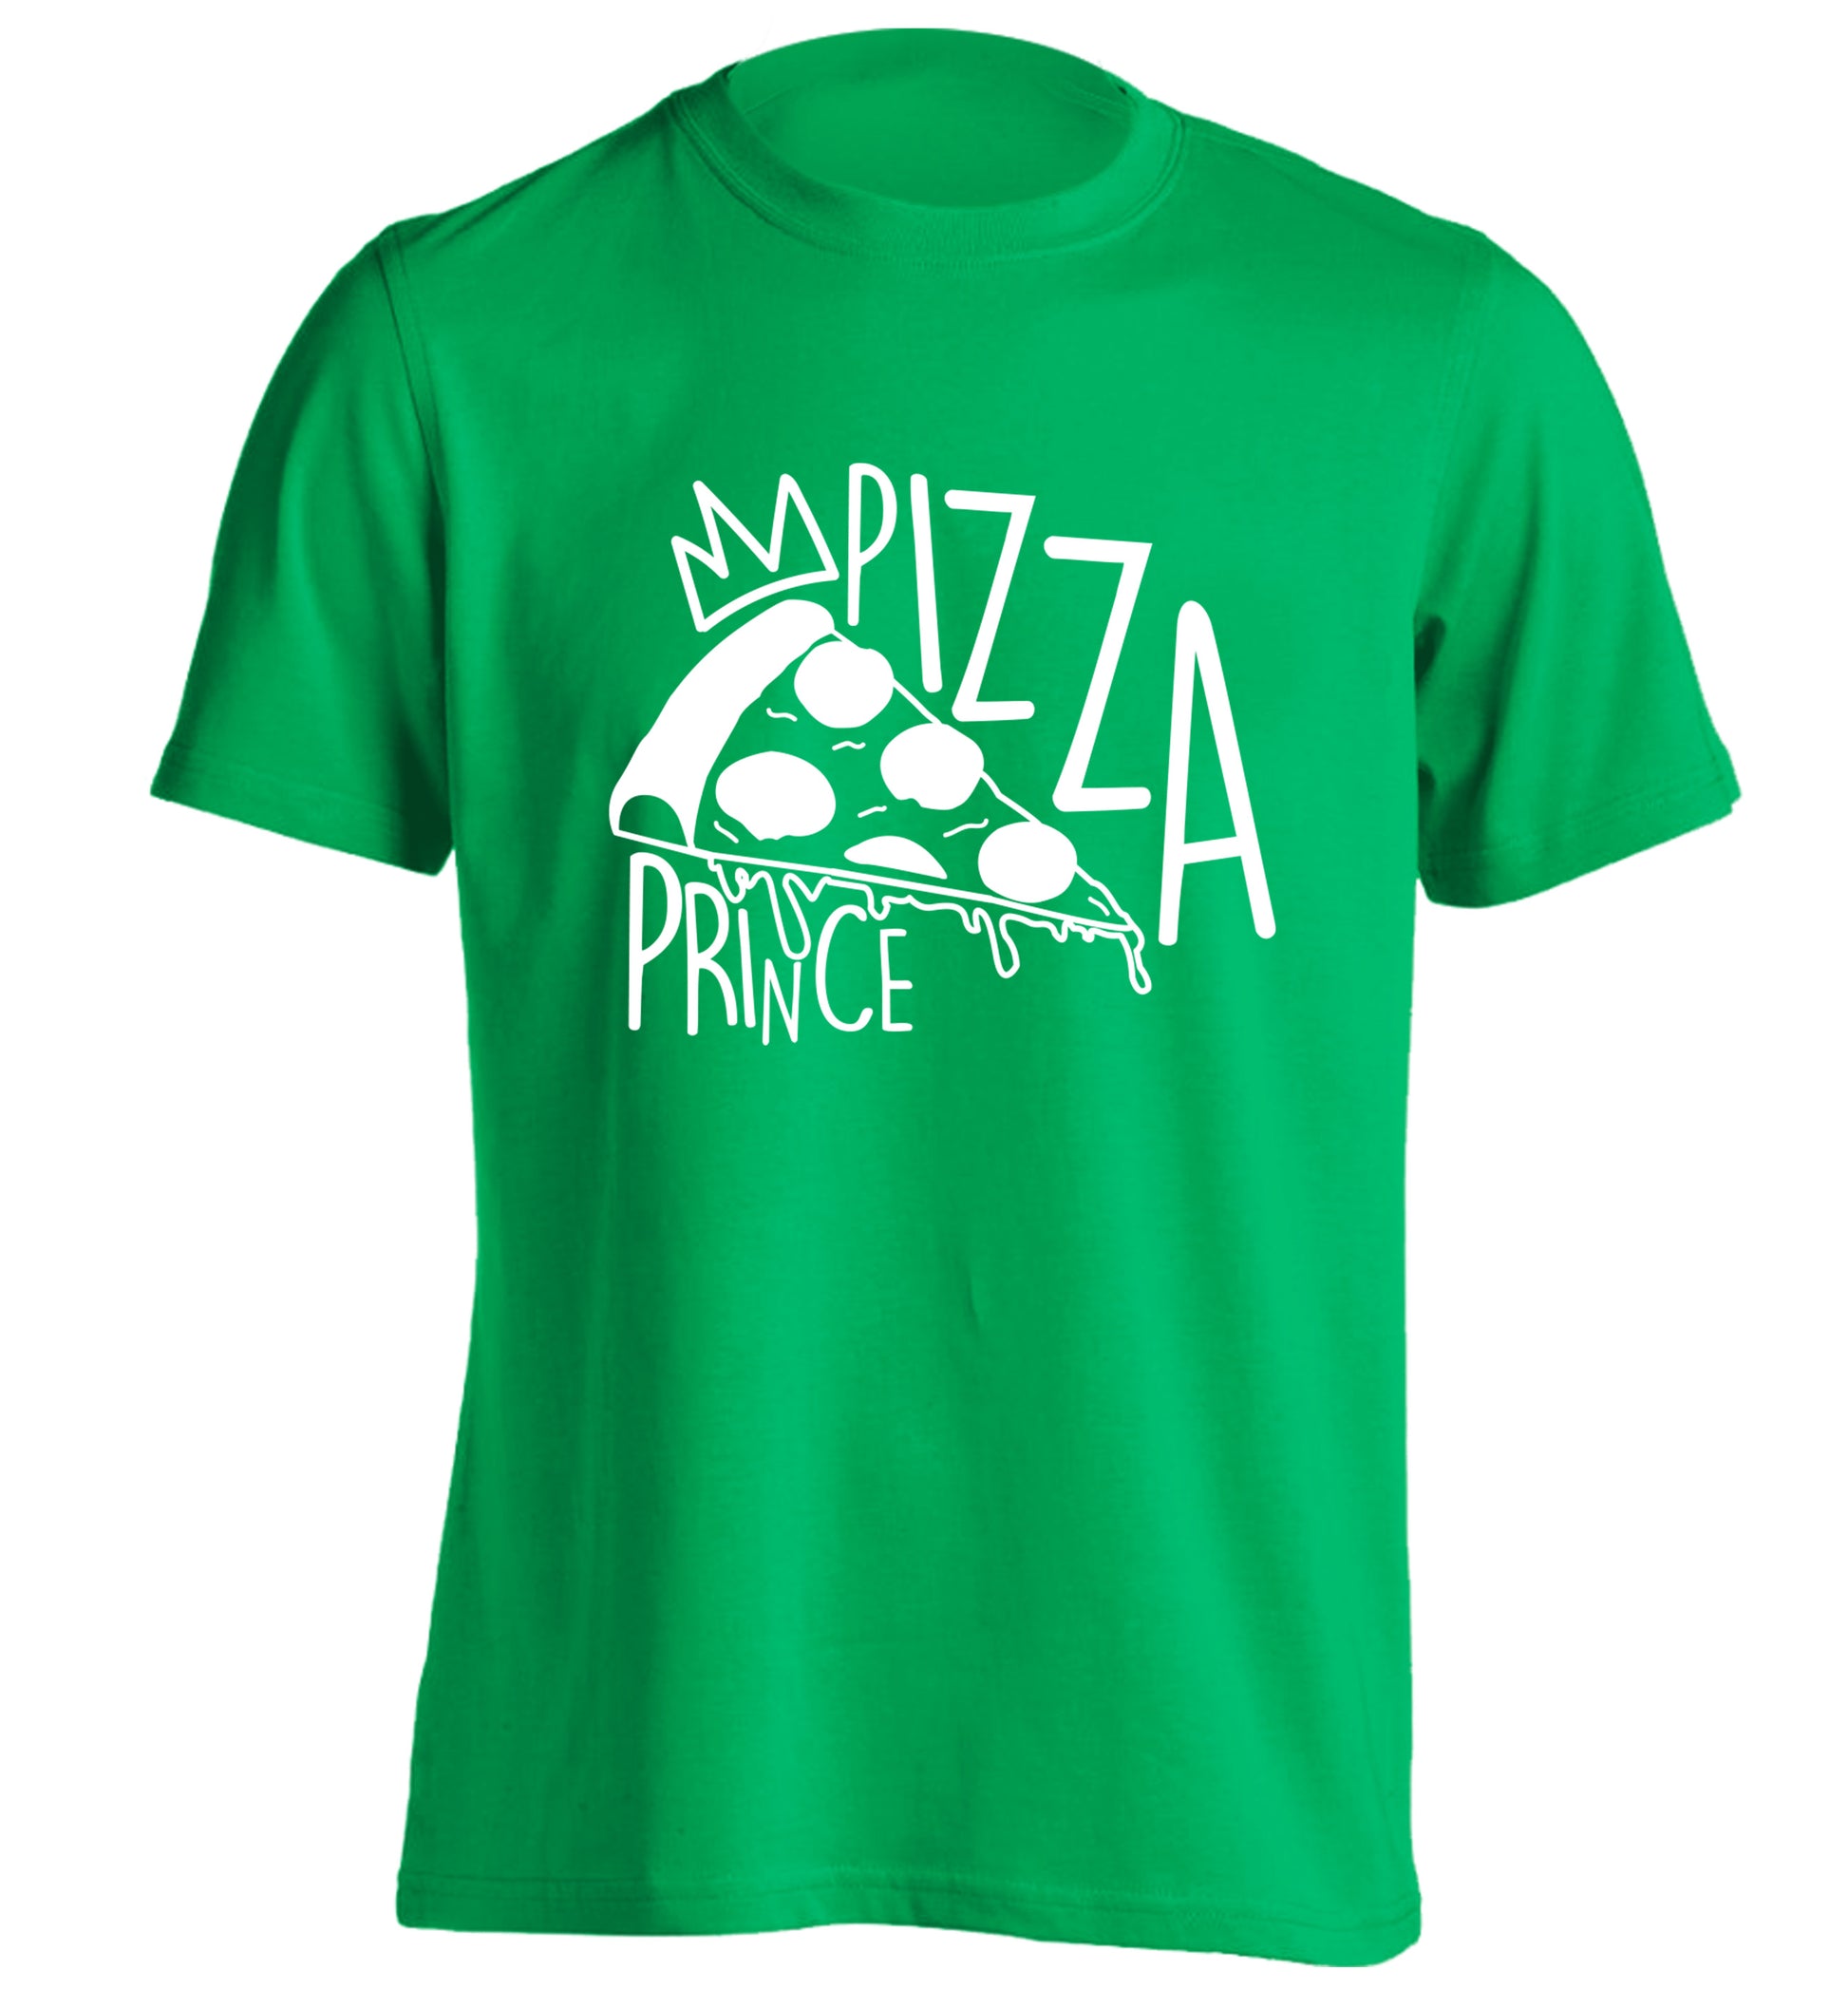 Pizza Prince adults unisex green Tshirt 2XL